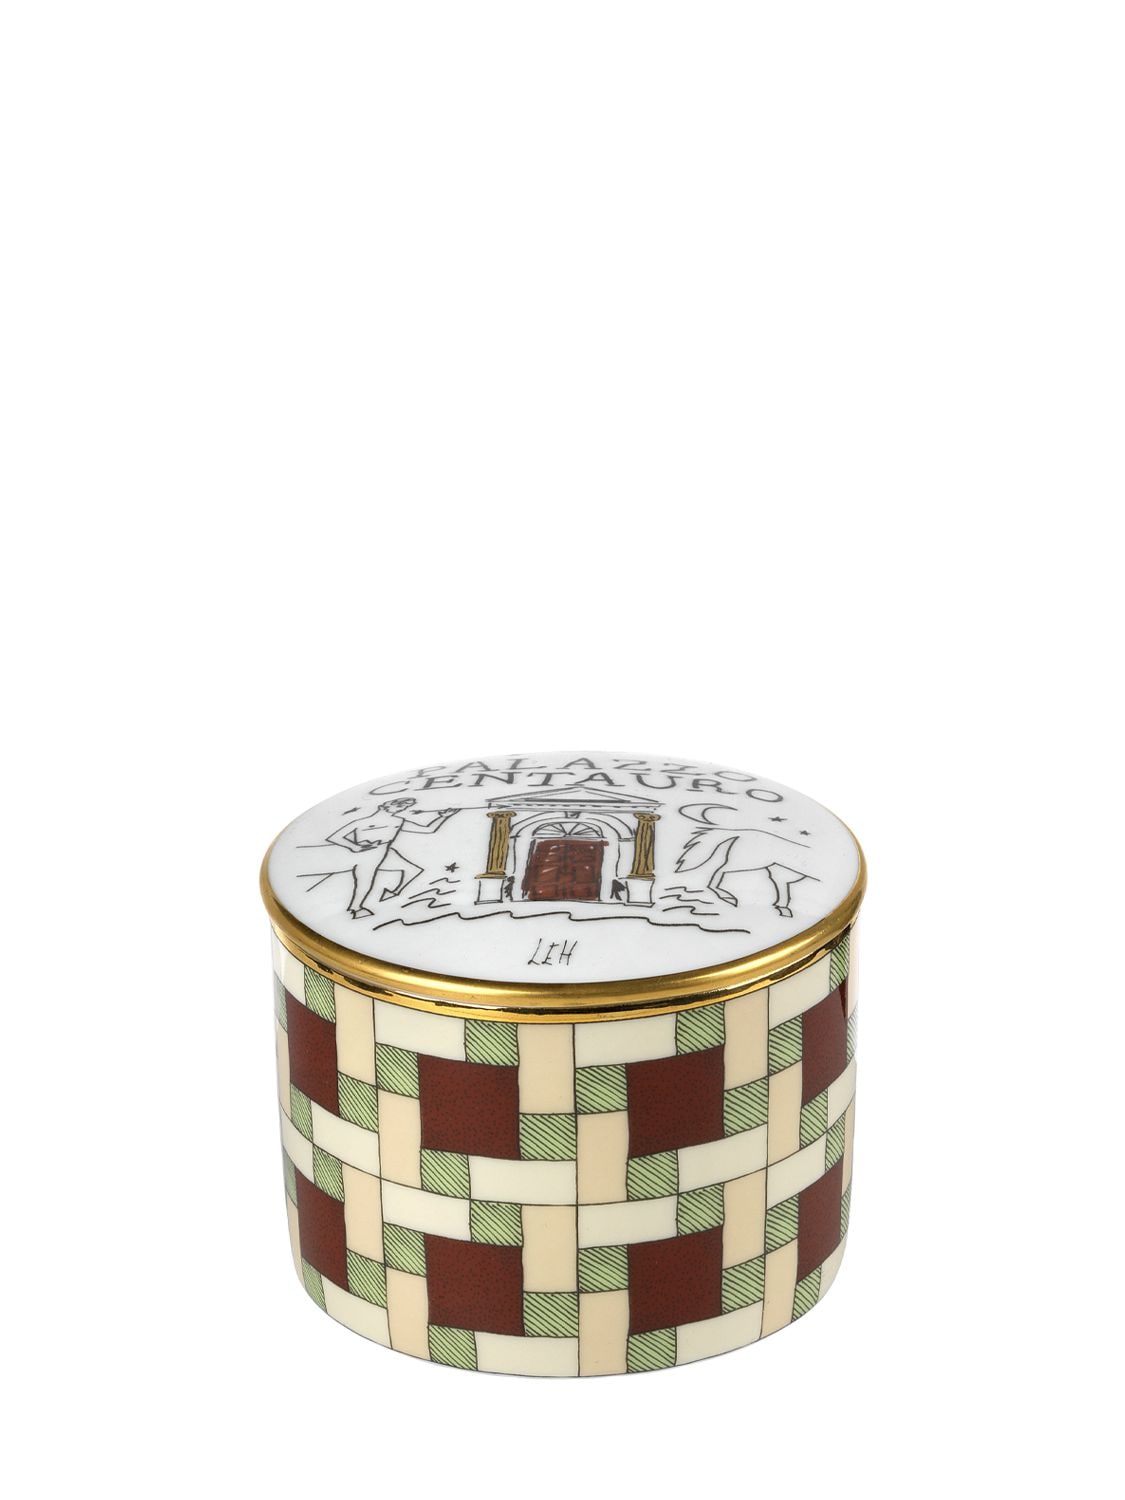 Image of Palazzo Centauro Porcelain Box